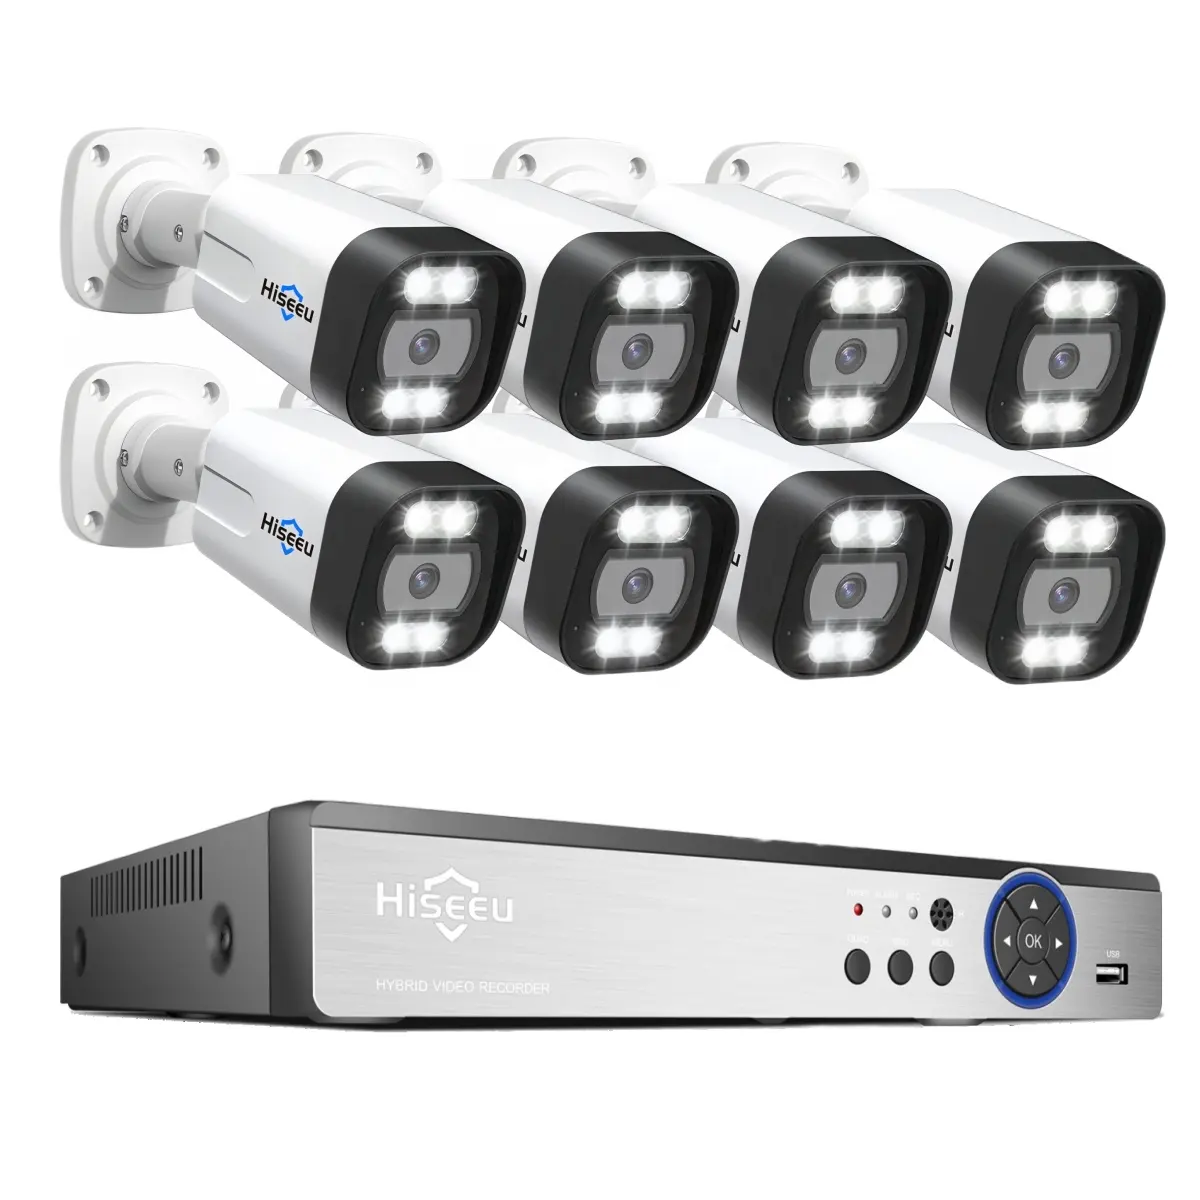 Hiseeu 4K 8 Kanaals 8mp Bewakingscamera Outdoor Home Poe Nvr Kit Cctv Ip Camera Surveillance Security Camera systeem